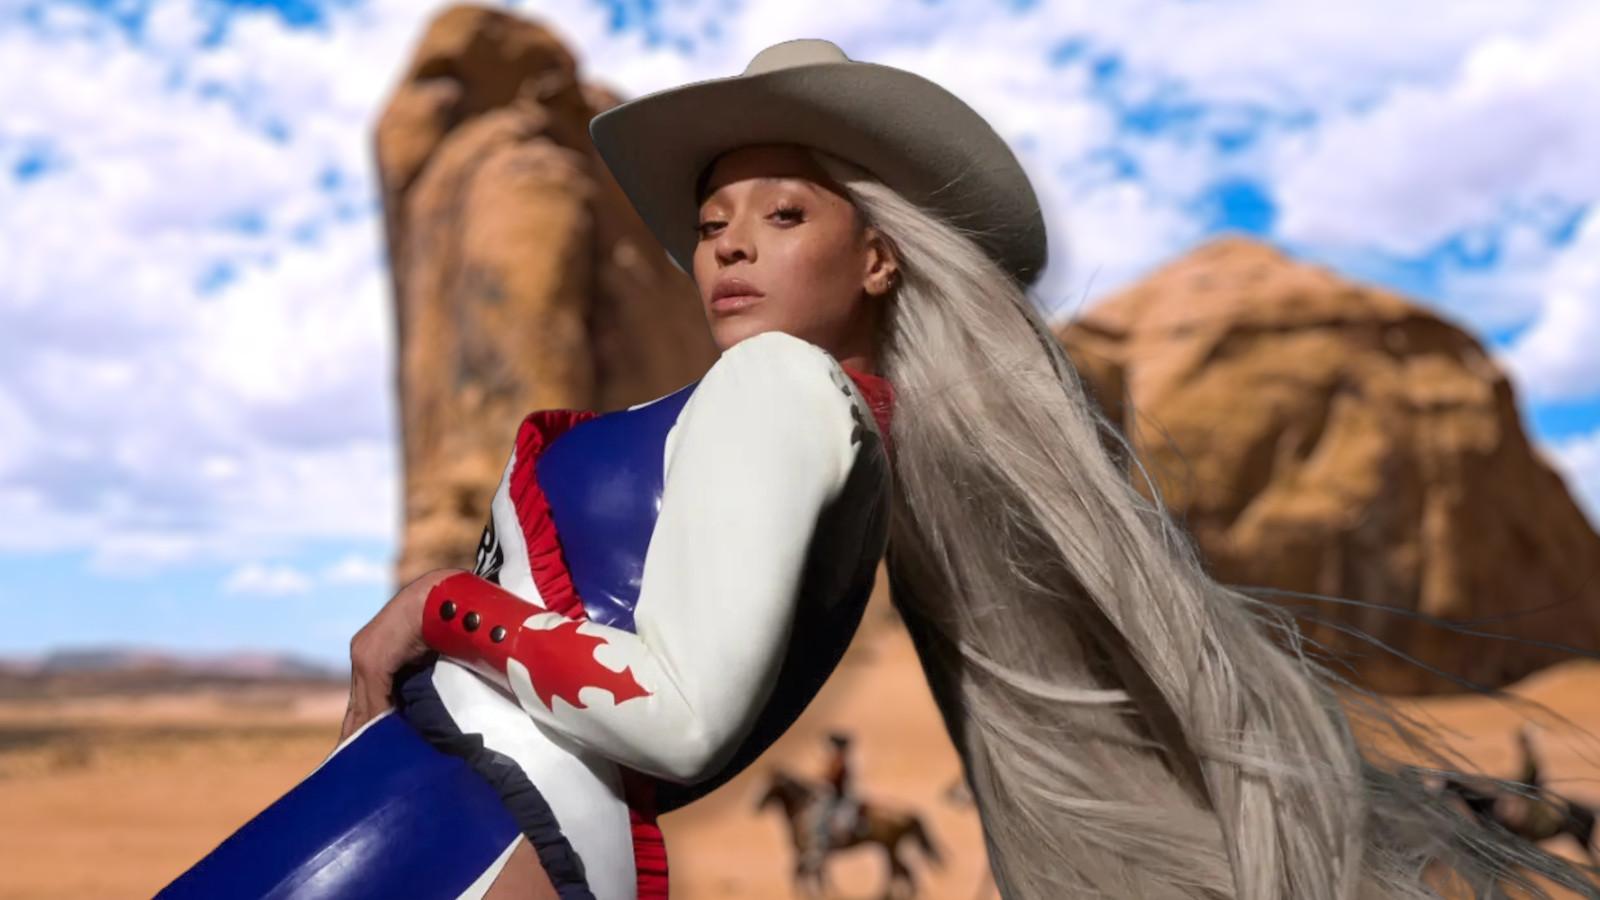 Beyoncé against a Western movie background